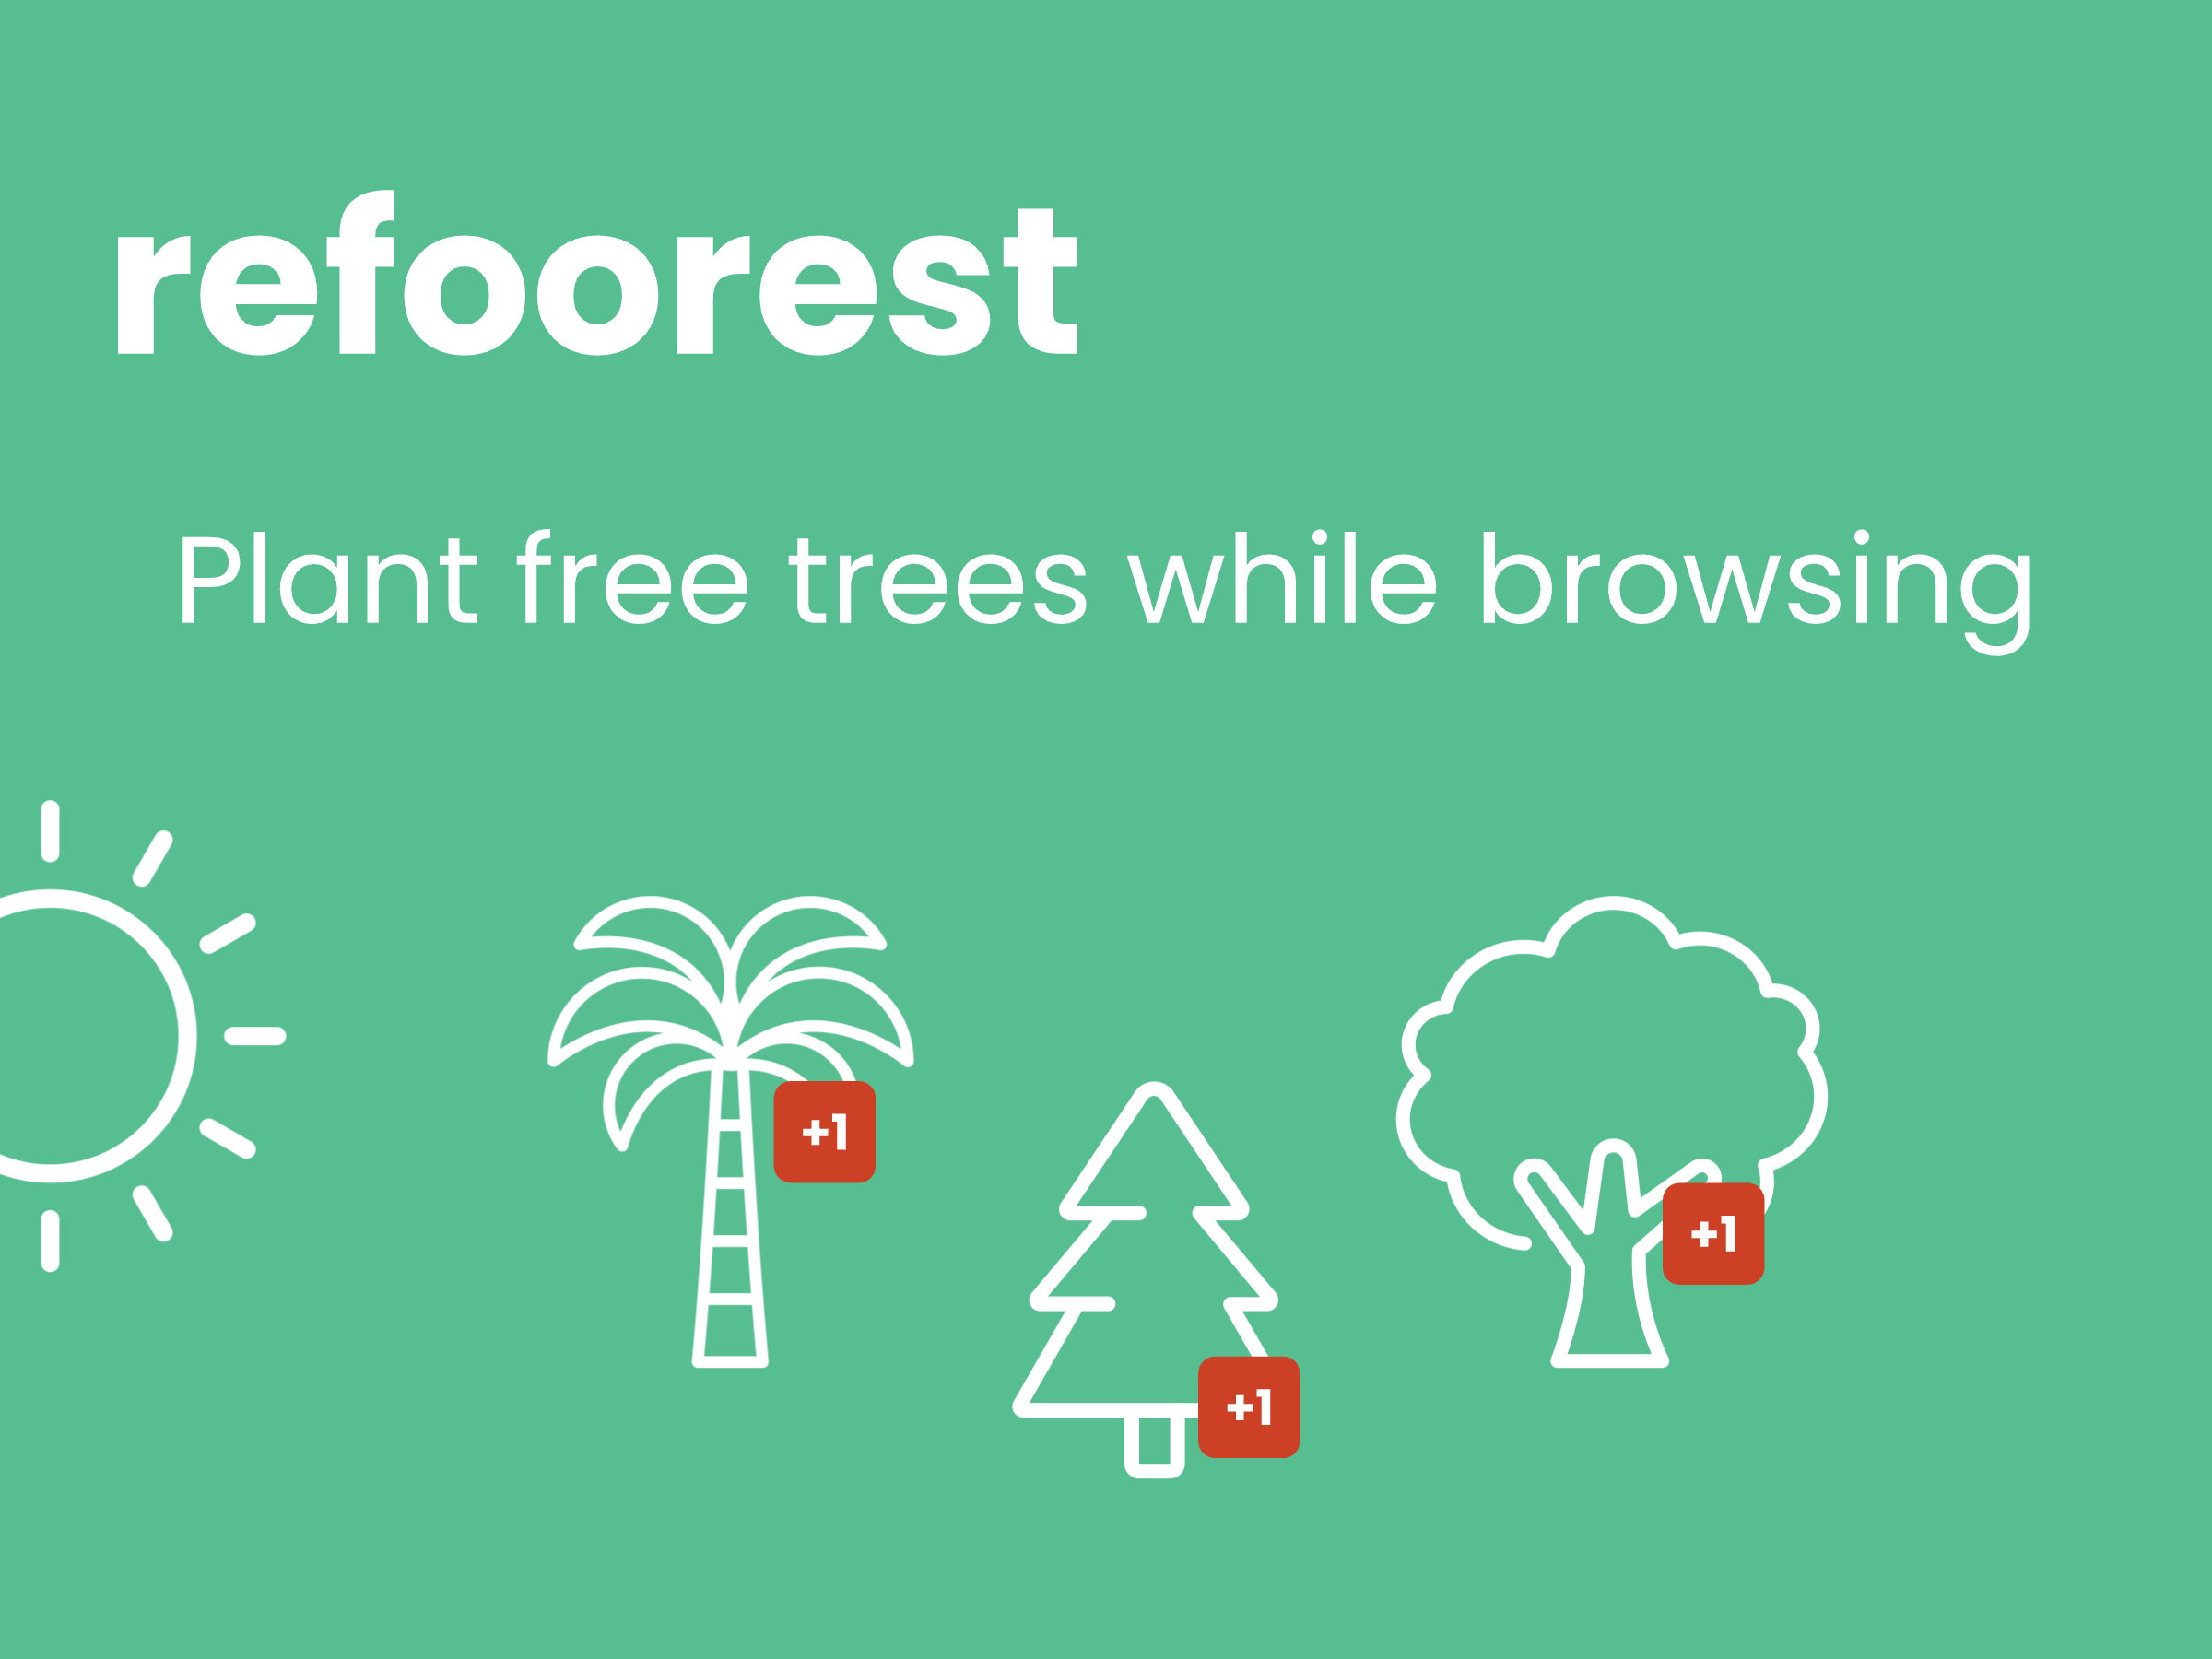 refoorest plant free trees